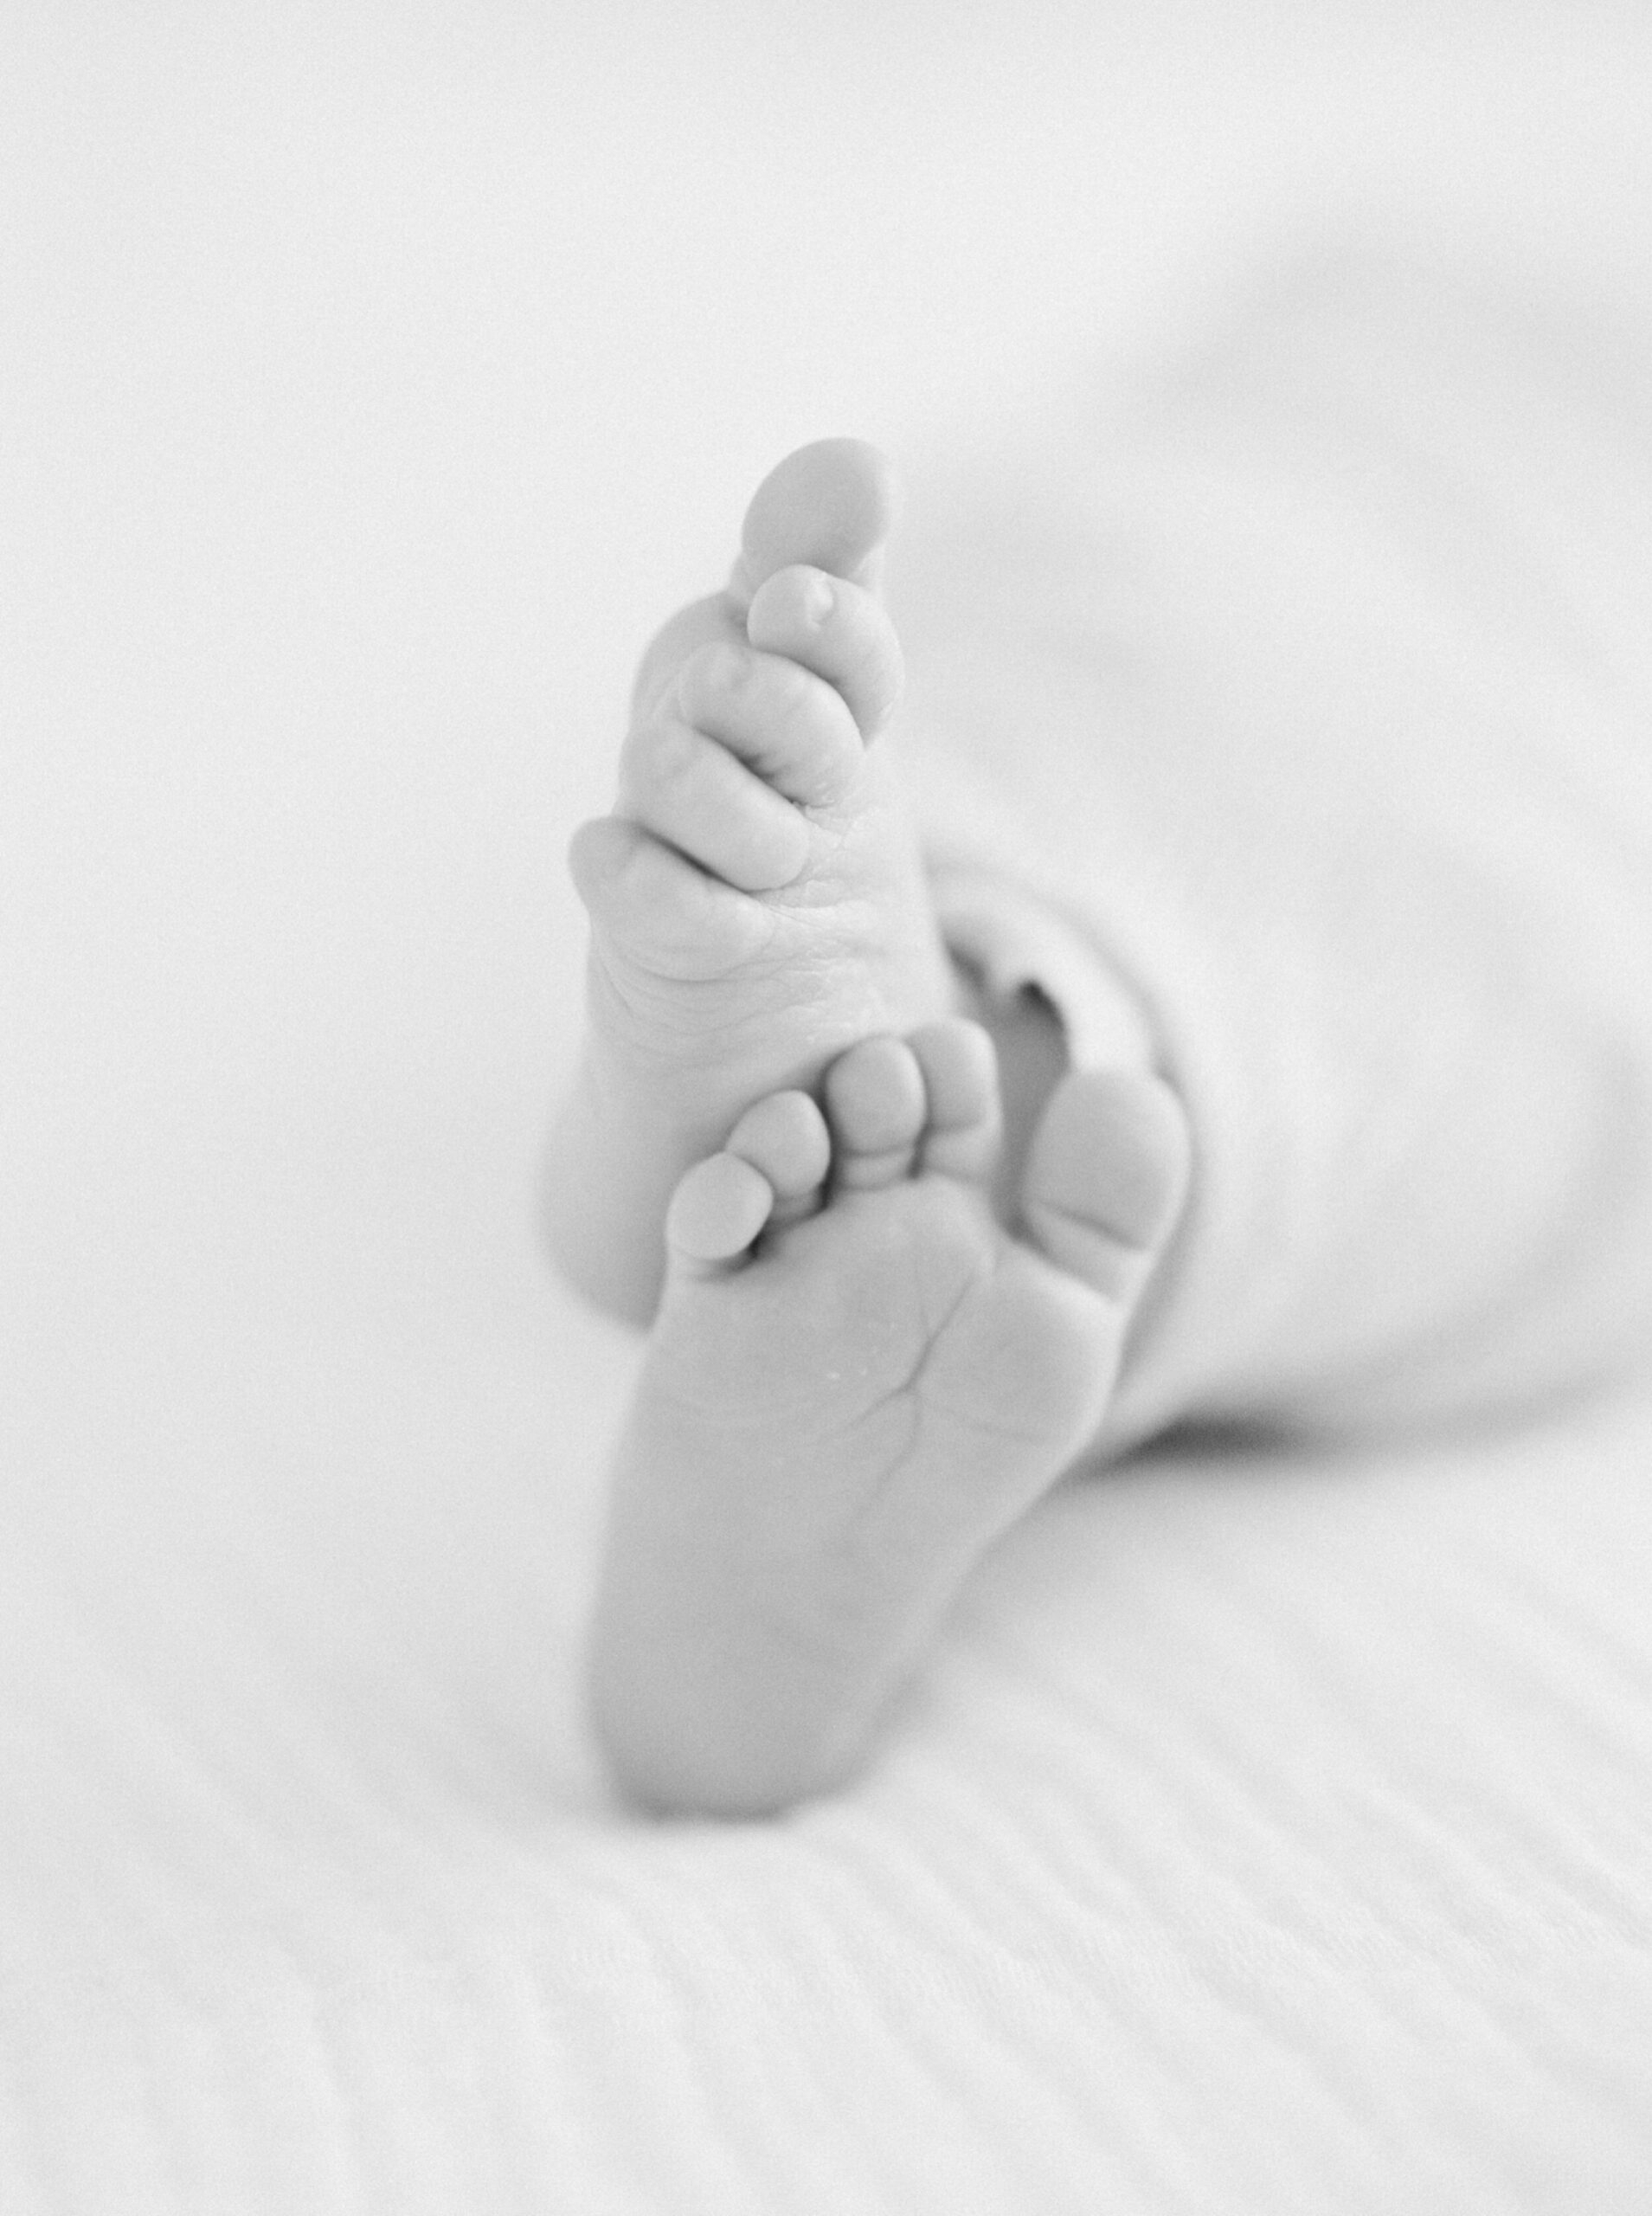  newborn photographers | best newborn baby photographer in calgary | in home lifestyle sessoin | newborn photography on film 